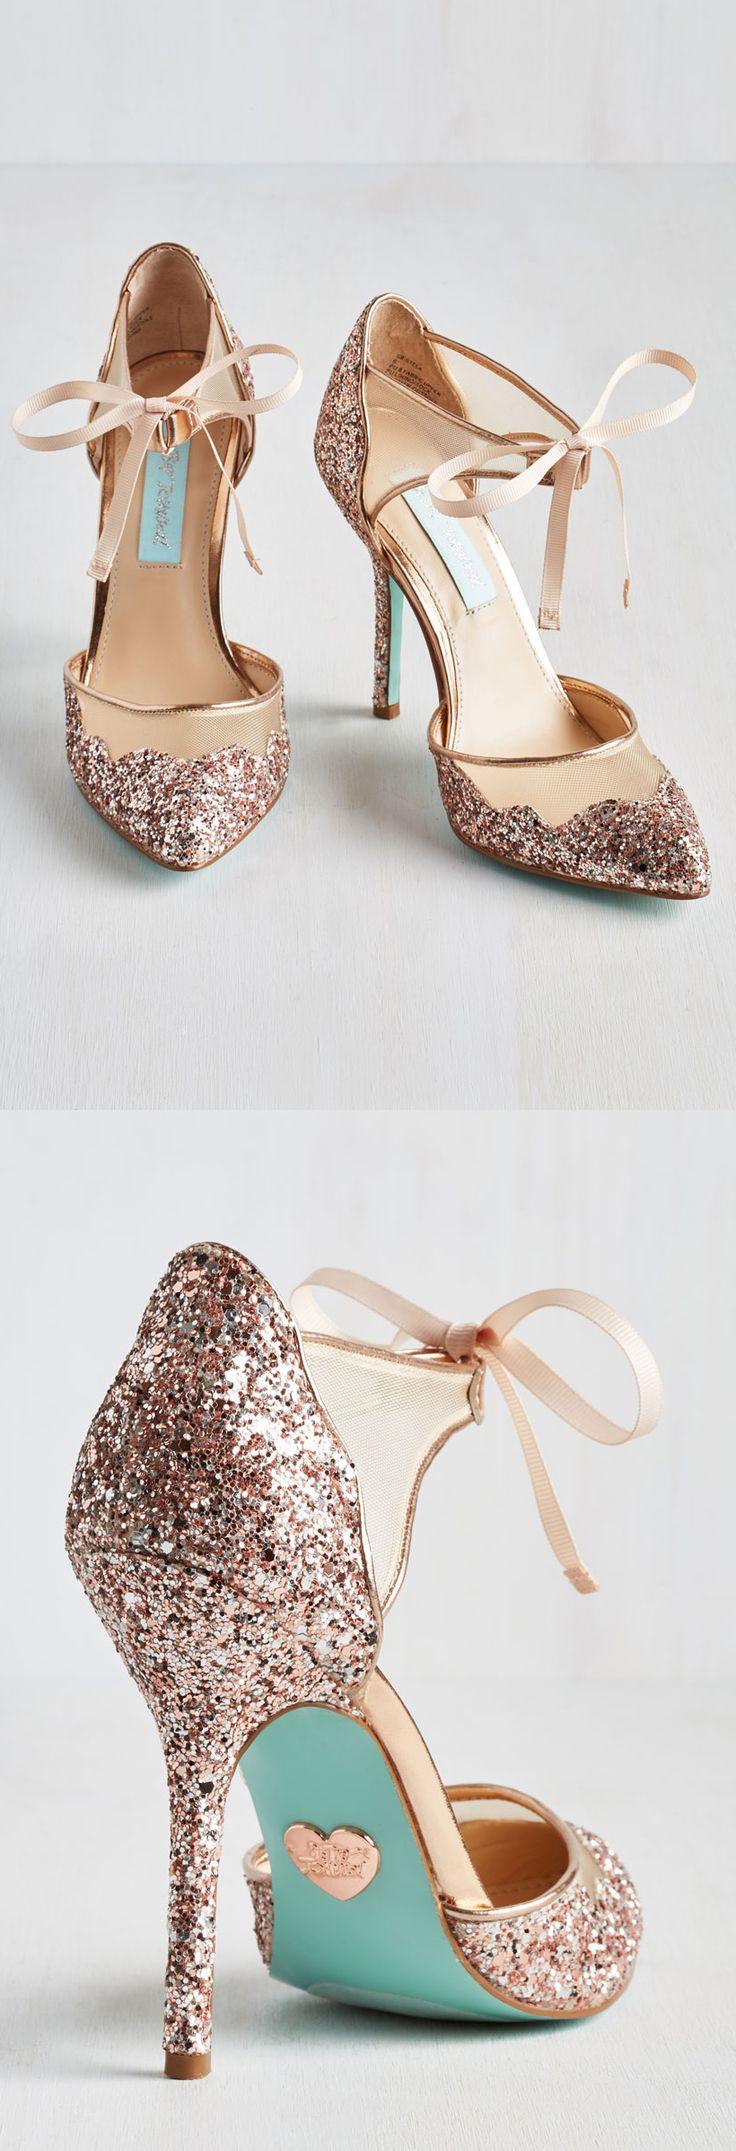 Wedding - Shoes Shoes Shoes!